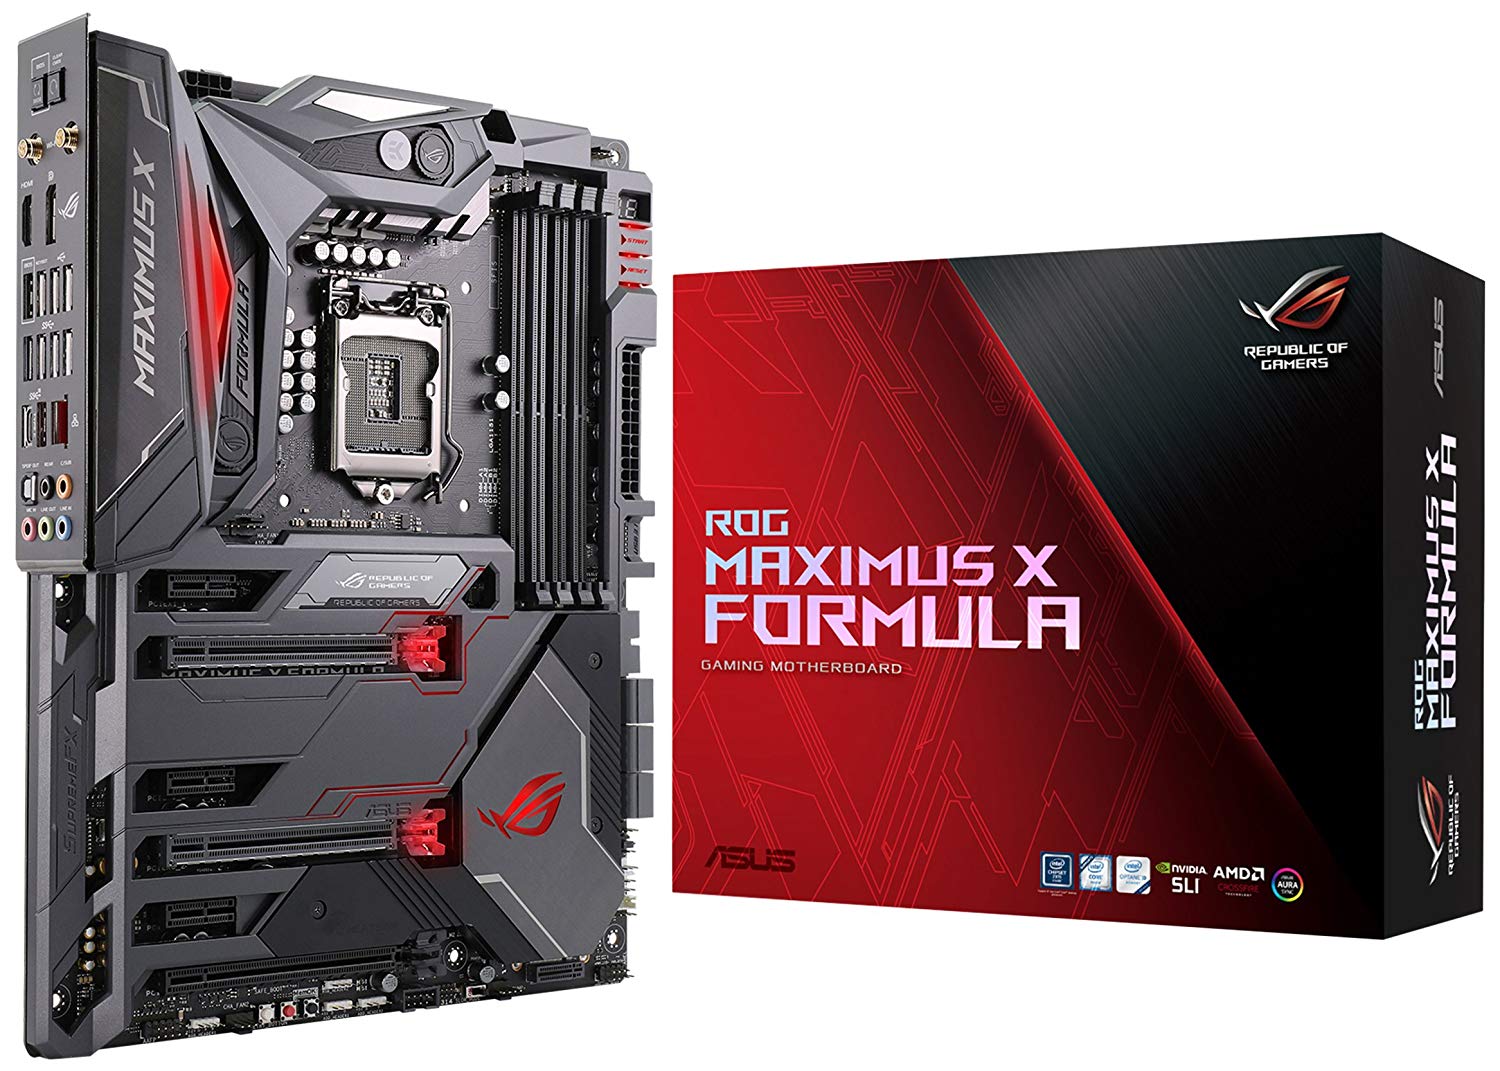 ASUS ROG Maximus X Formula LGA1151 (300 Series) DDR4 DP HDMI M.2 Z370 ATX Motherboard